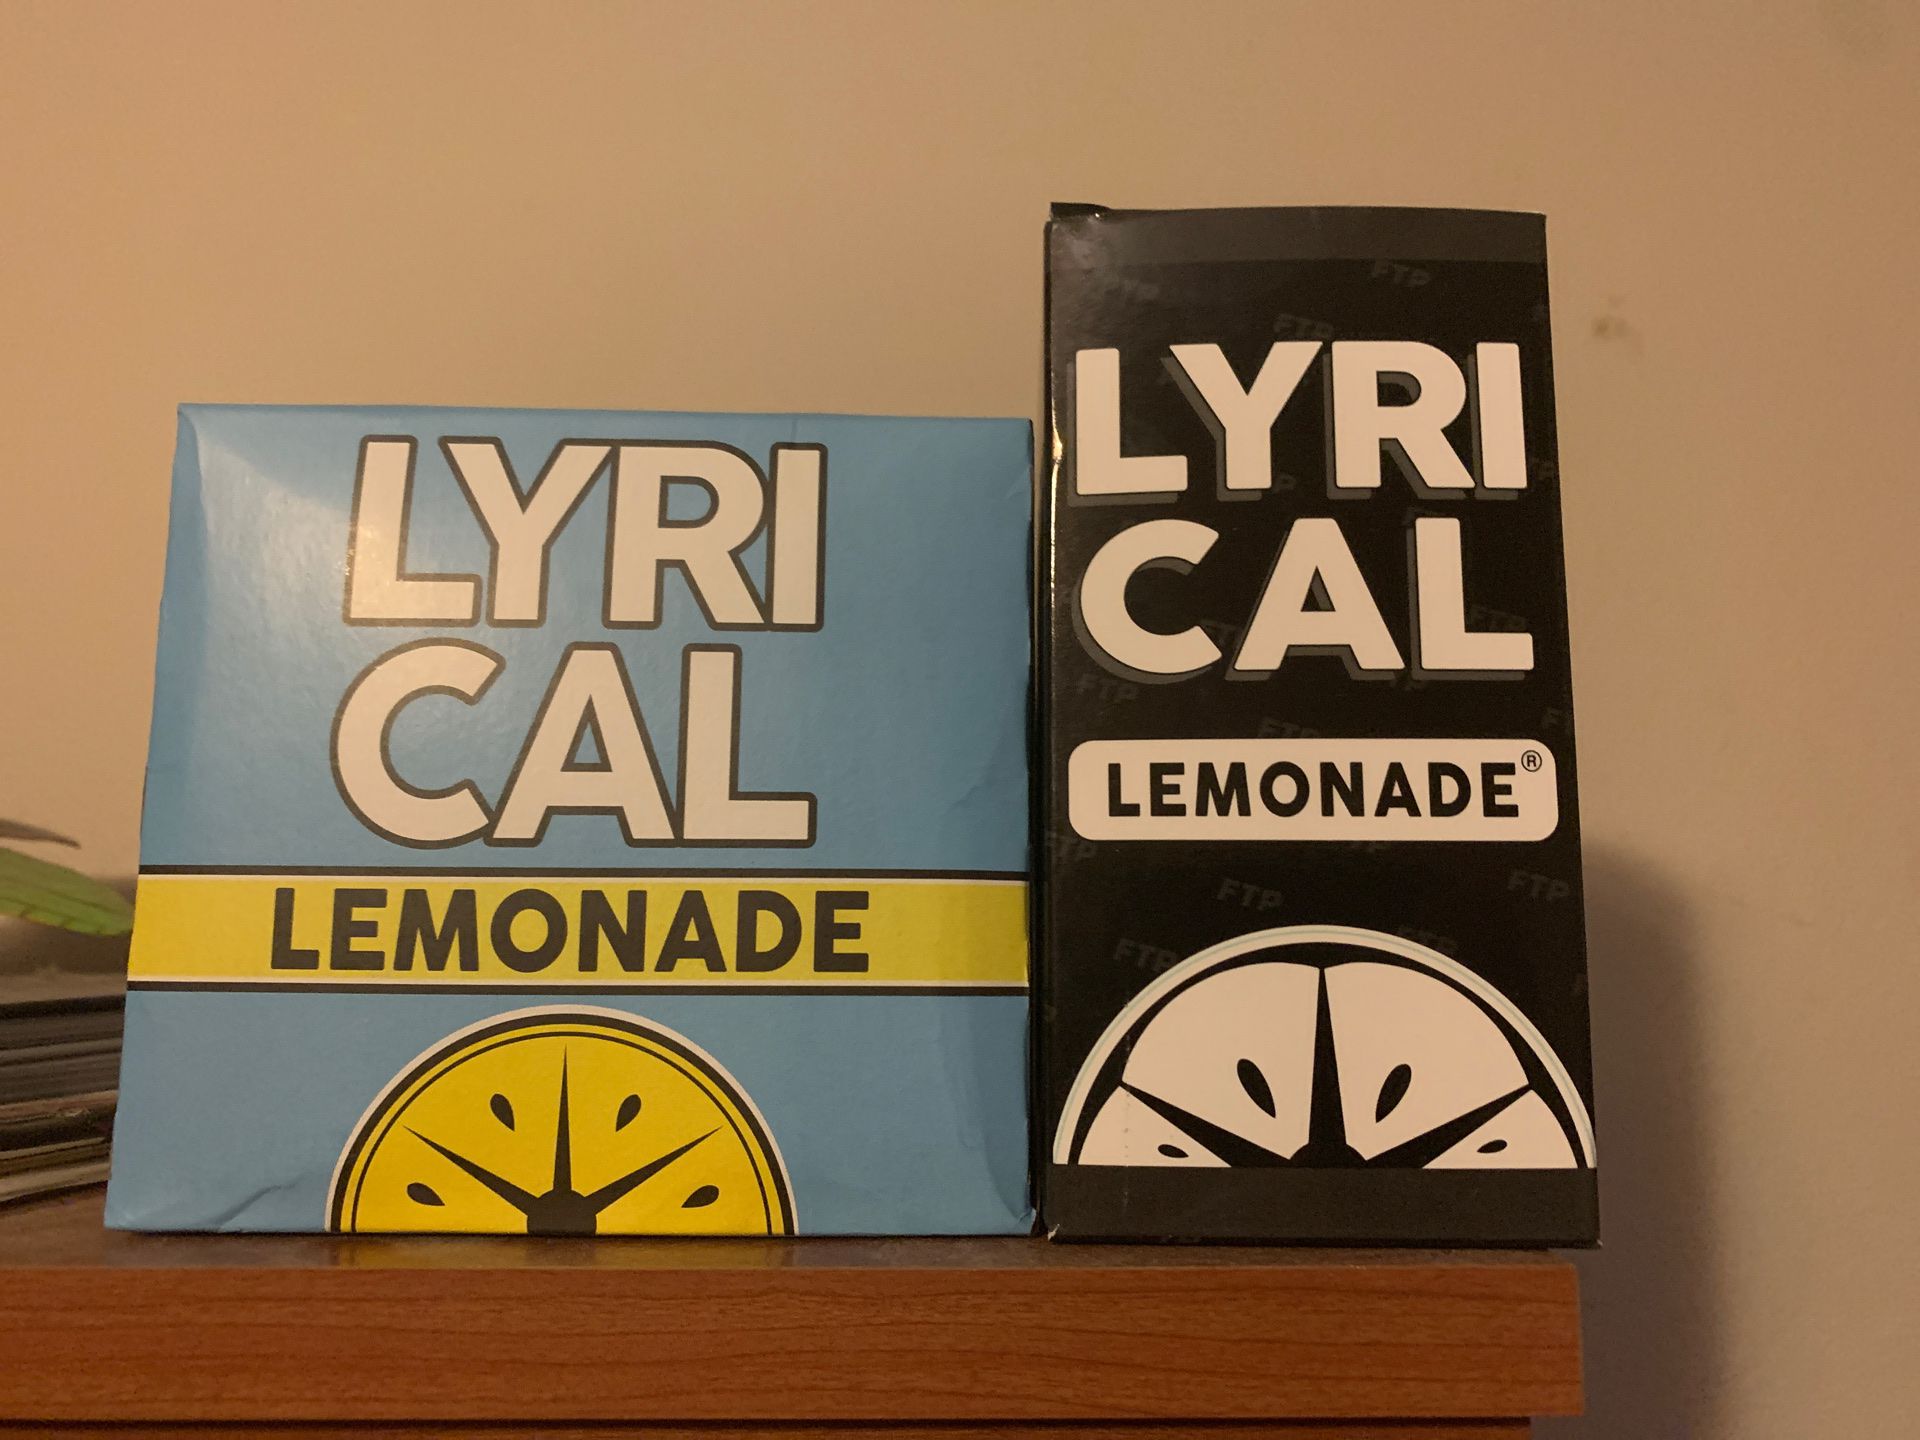 Lyrical lemonade